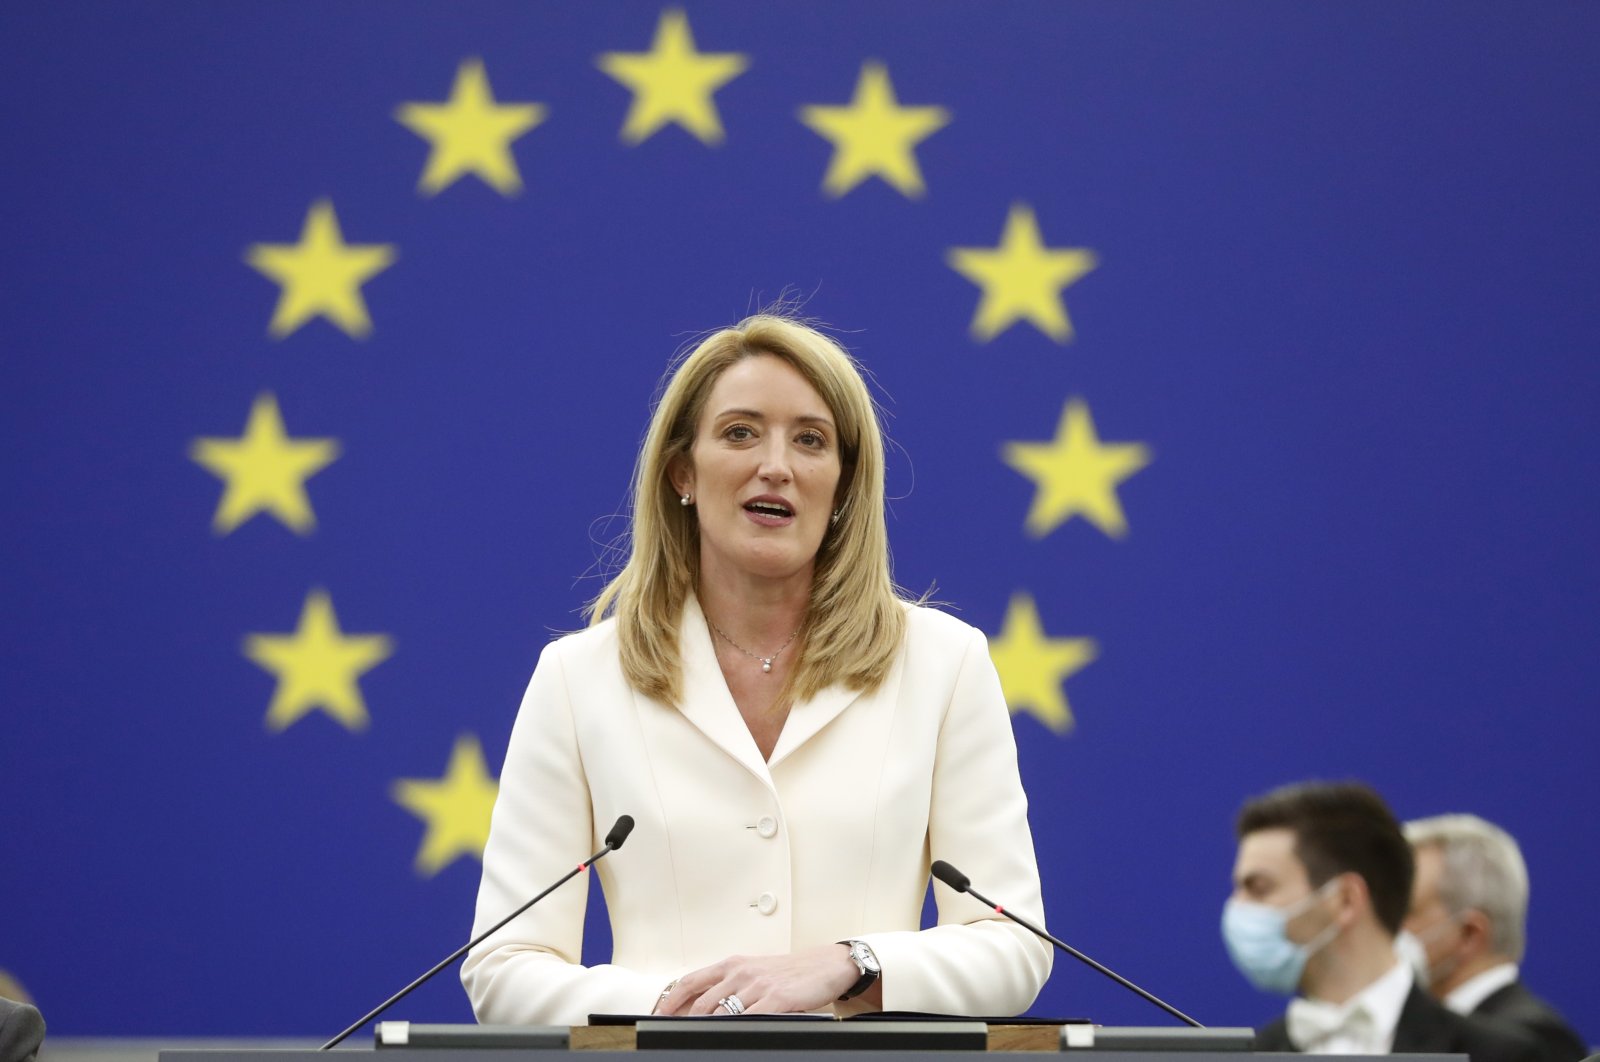 Christian Democrat Roberta Metsola of Malta delivers a speech at the European Parliament, in Strasbourg, eastern France, Jan 18, 2022. (AP Photo)